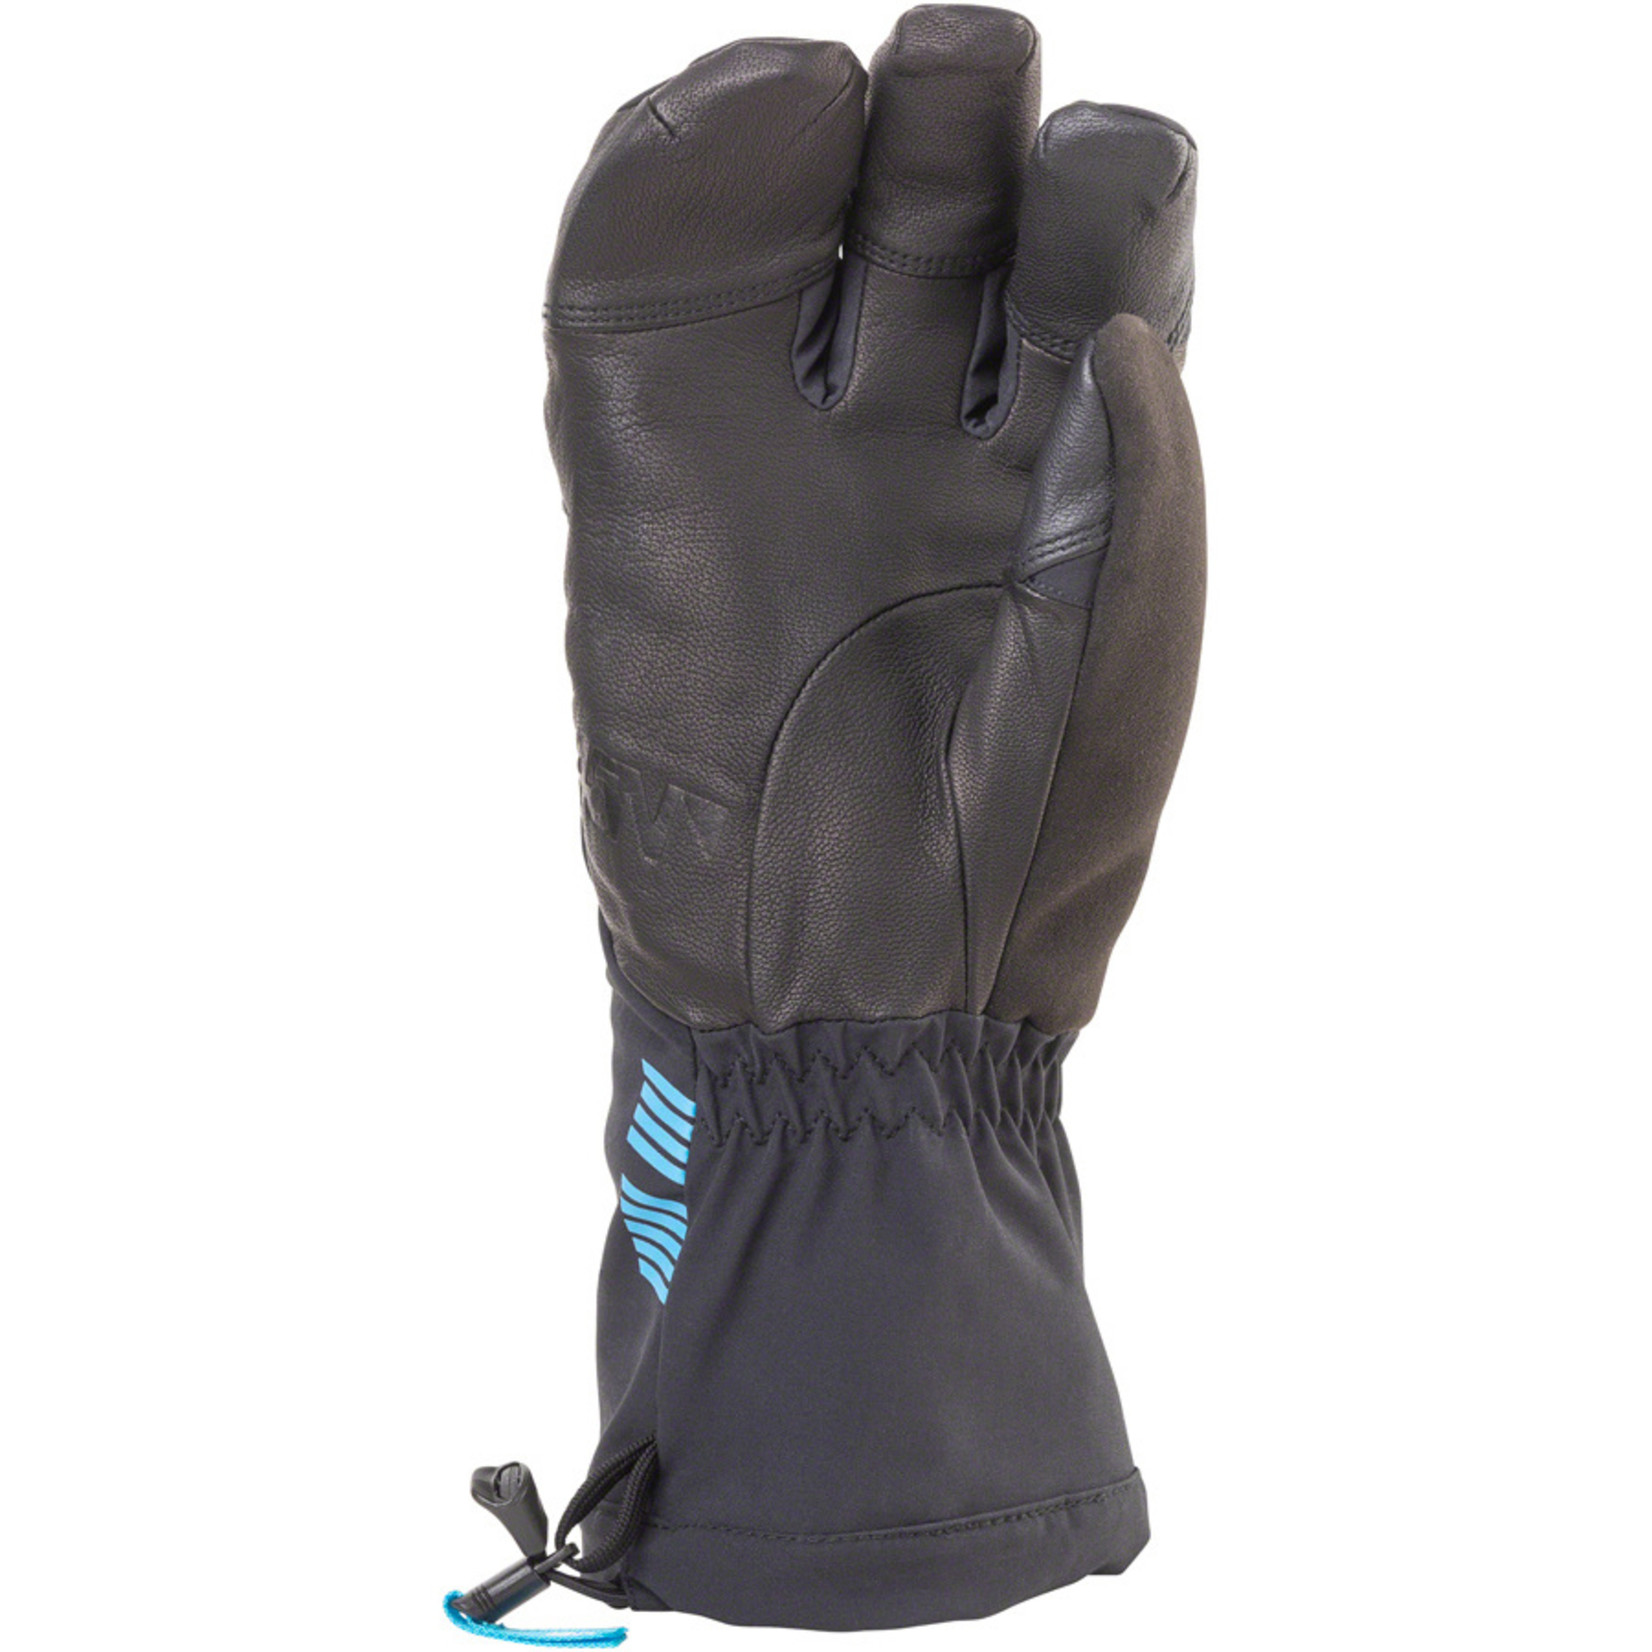 45NRTH 45Nrth Sturmfist 4 Finger Gloves, Black